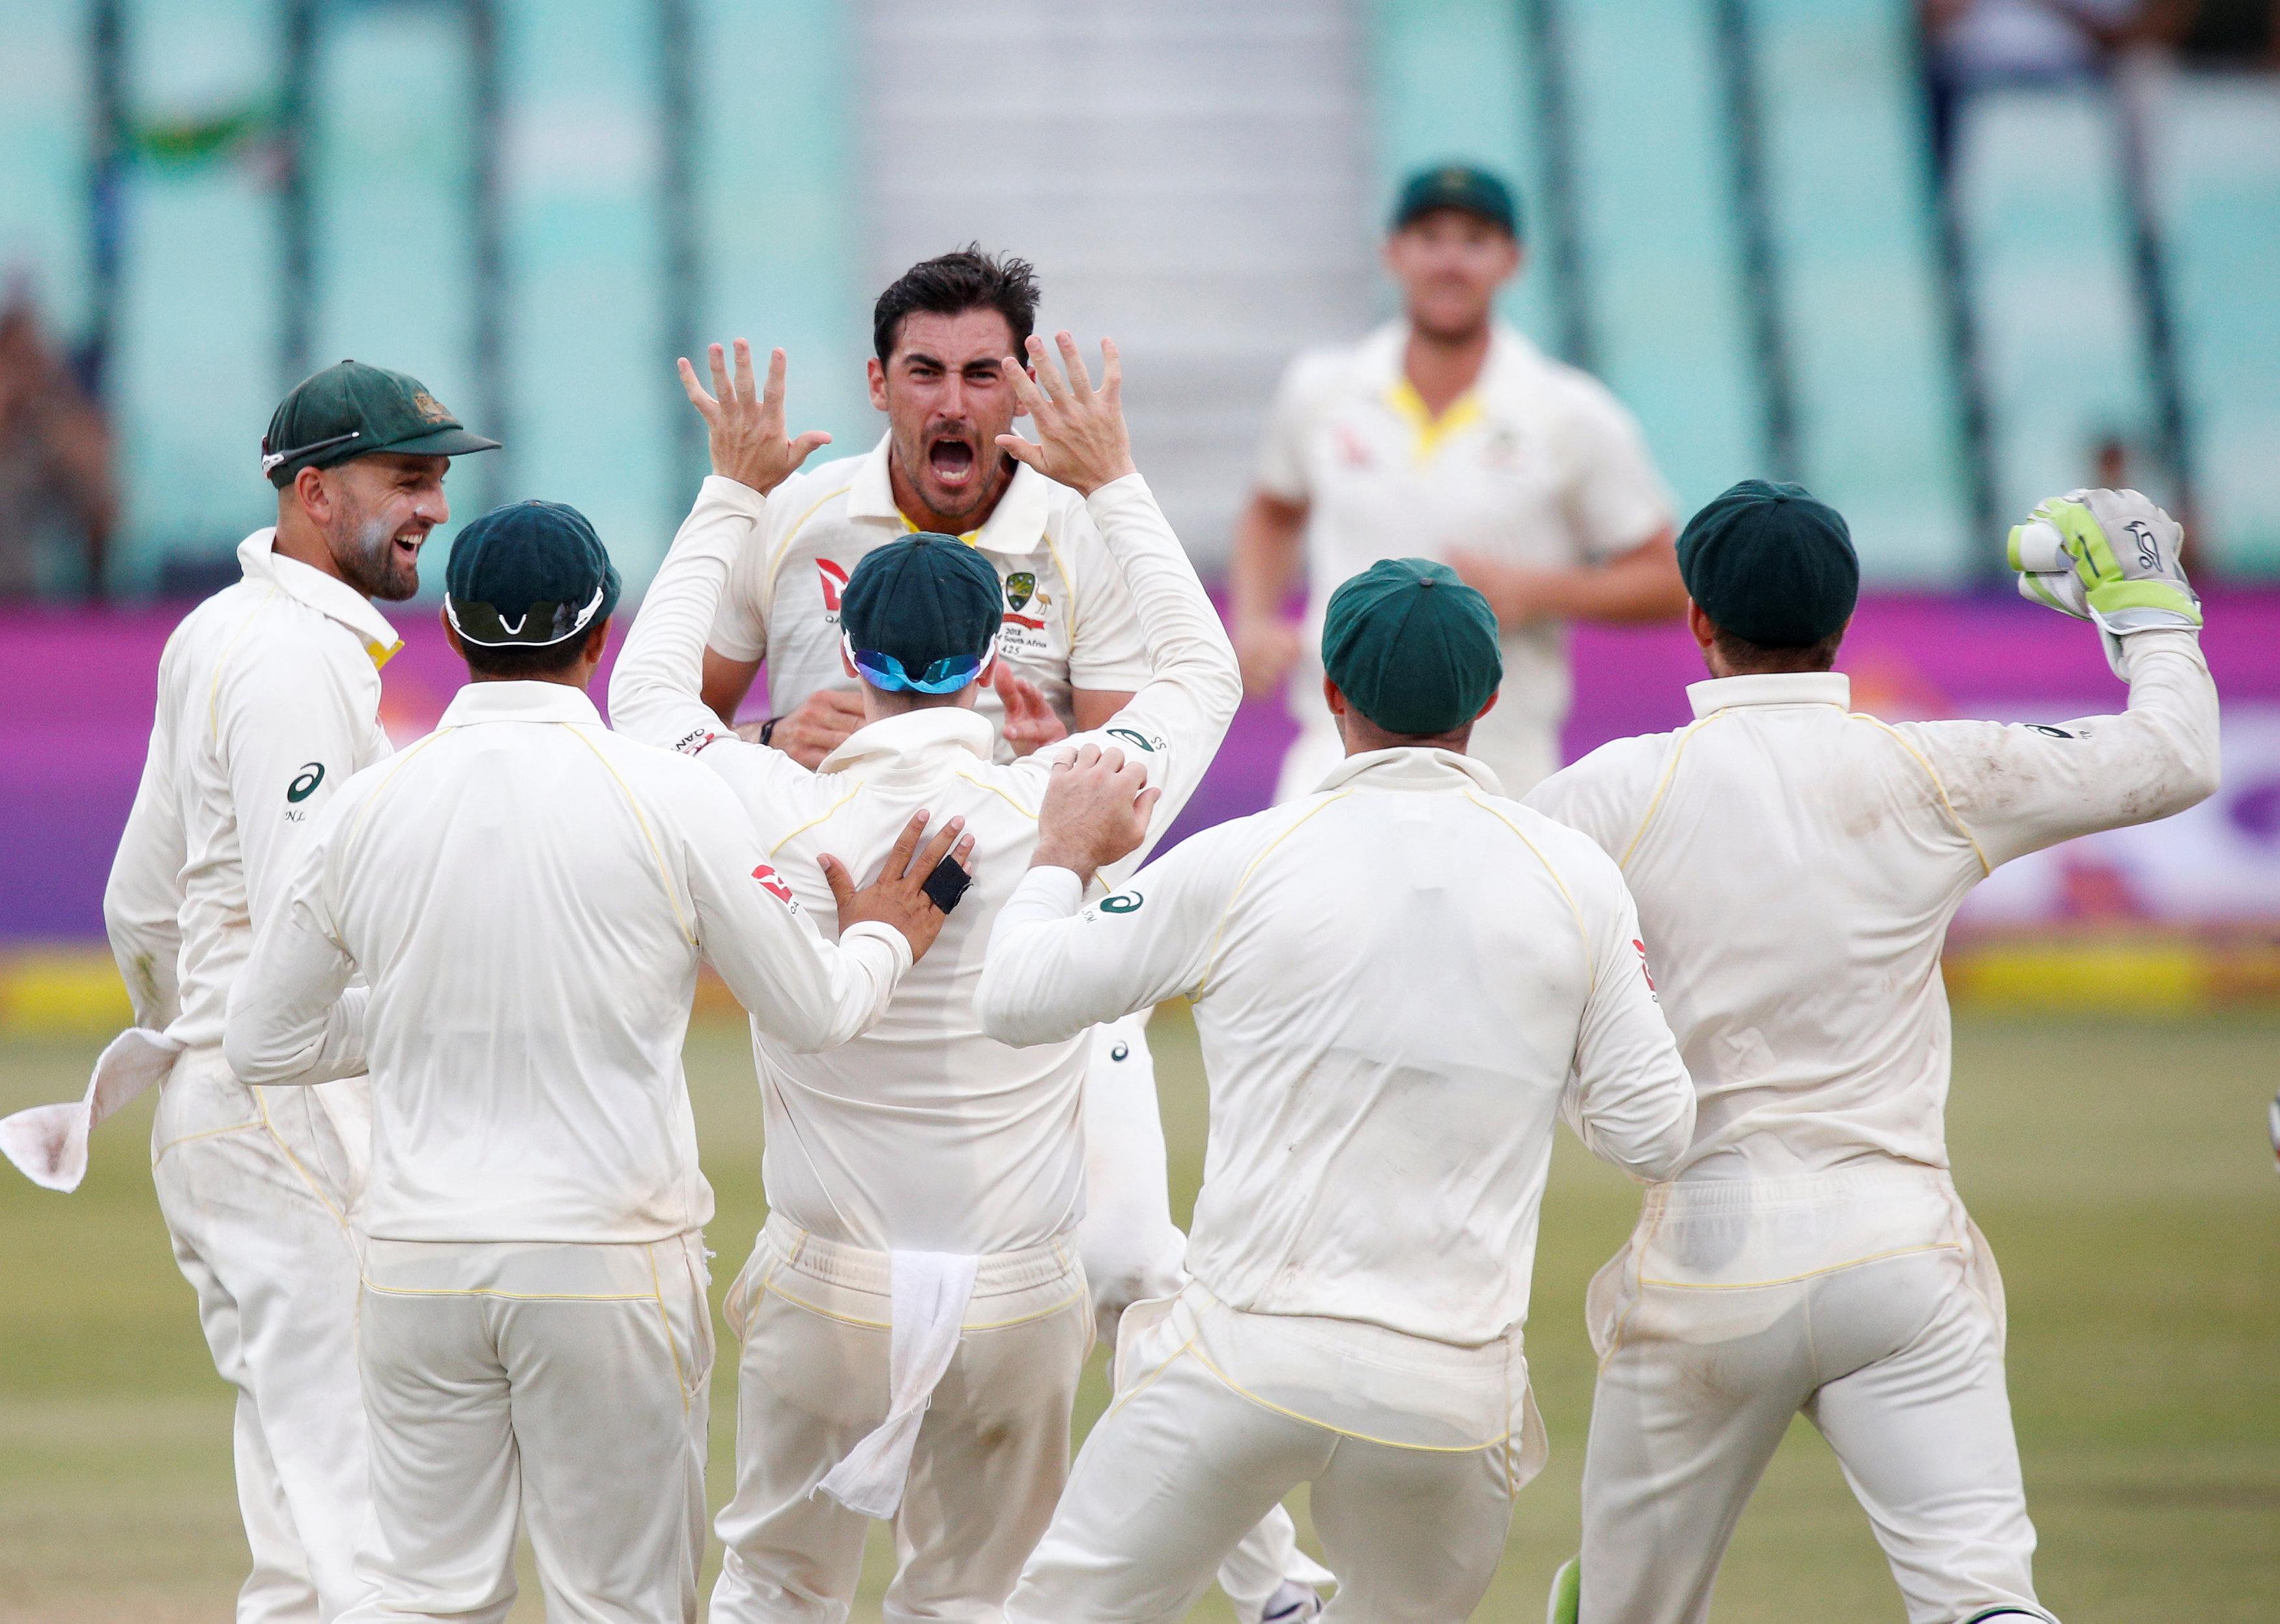 Cricket: Starc puts Australia on the verge of victory